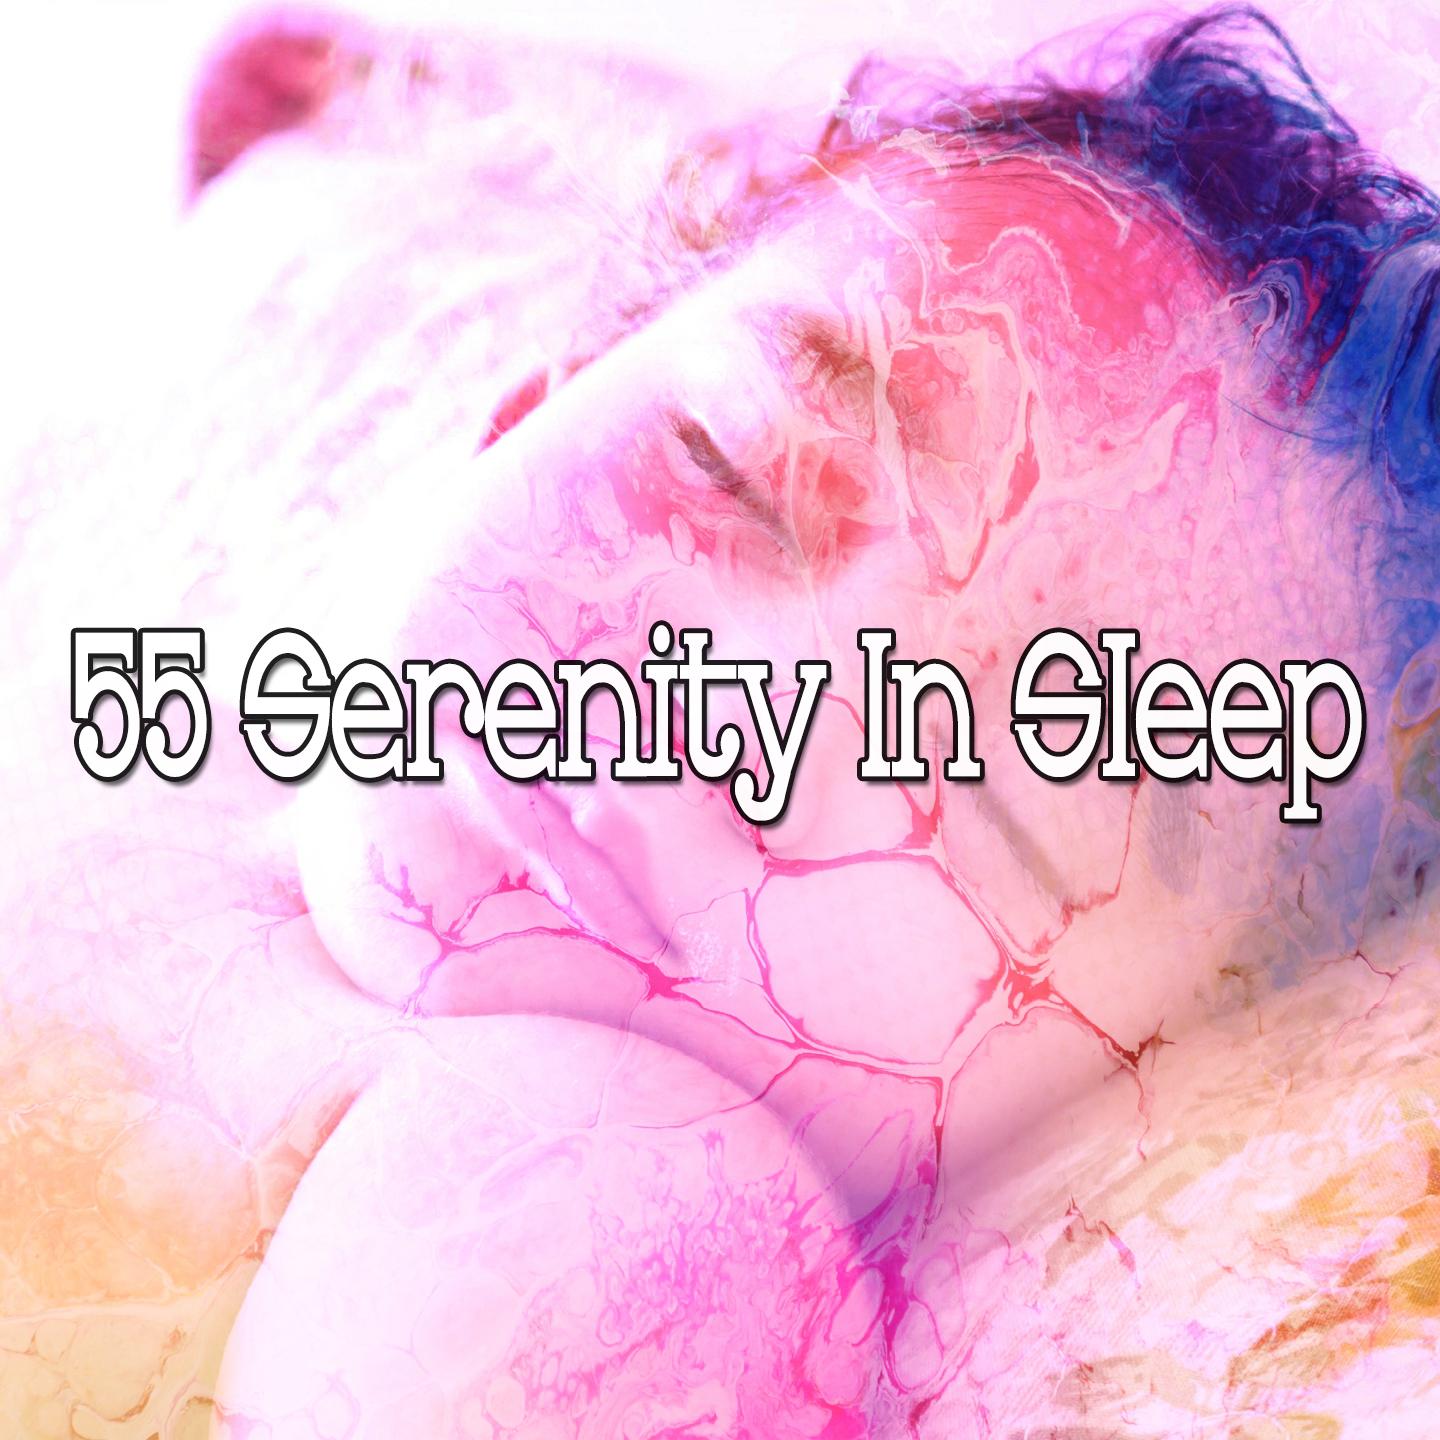 55 Serenity in Sleep